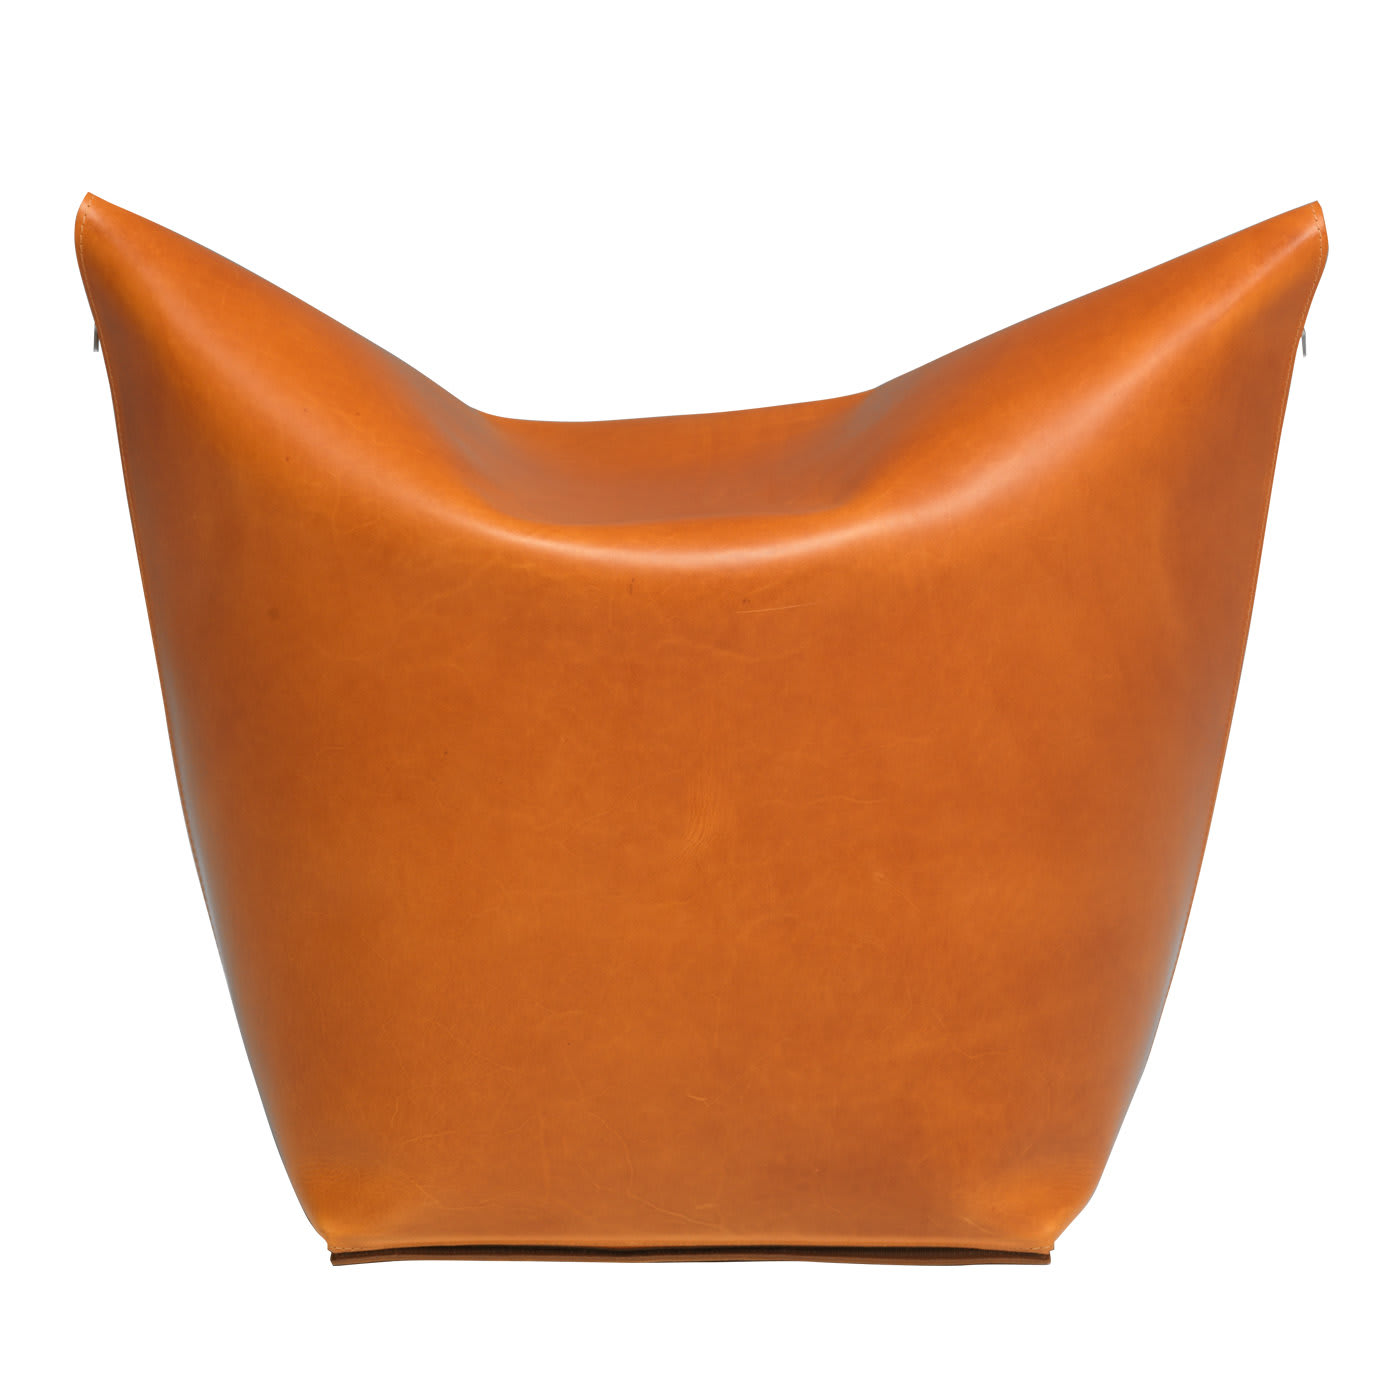 Mao Orange Leather Bag Chair by Viola Tonucci - Manifestodesign